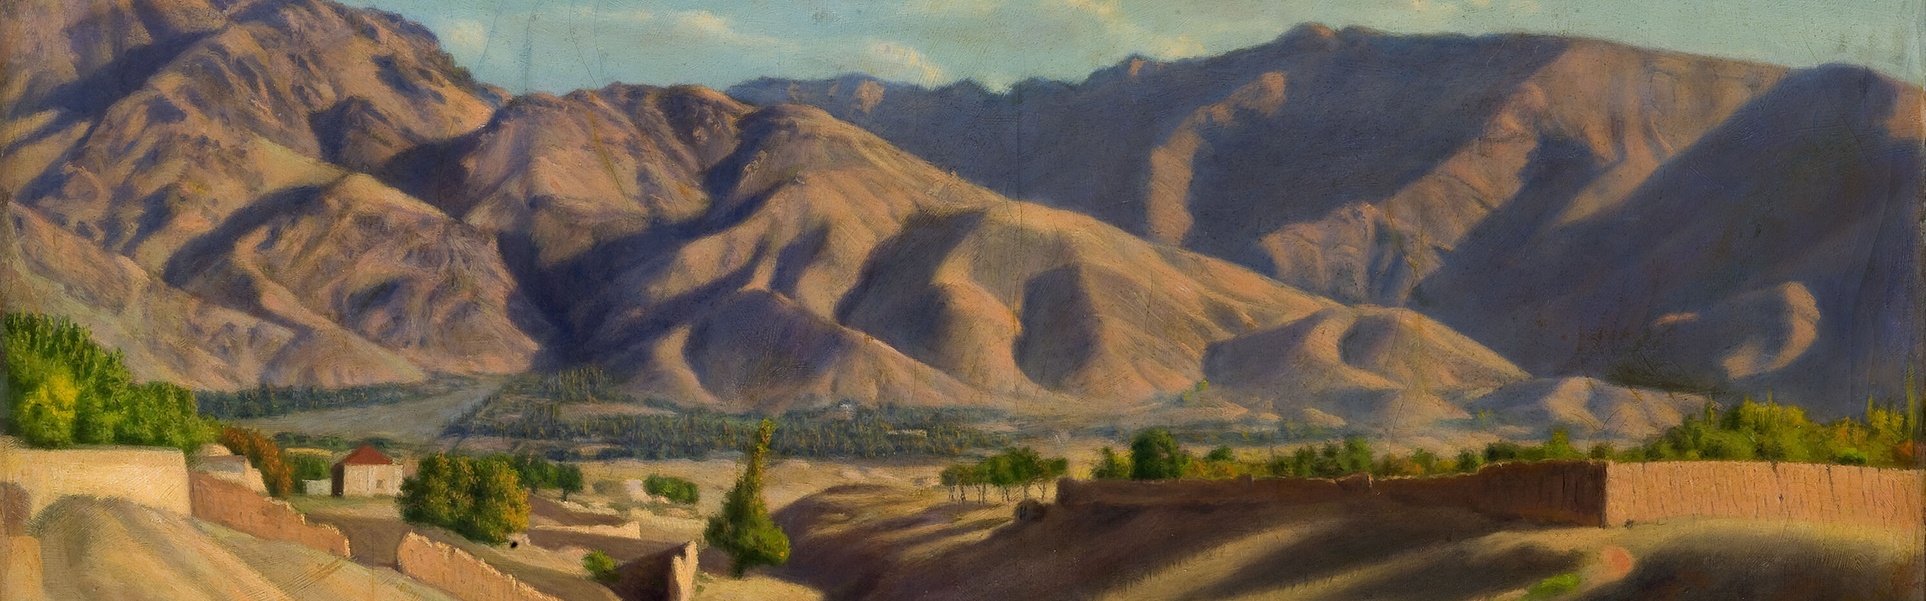 Gallery of Painting by Kamal-ol-molk - Iran